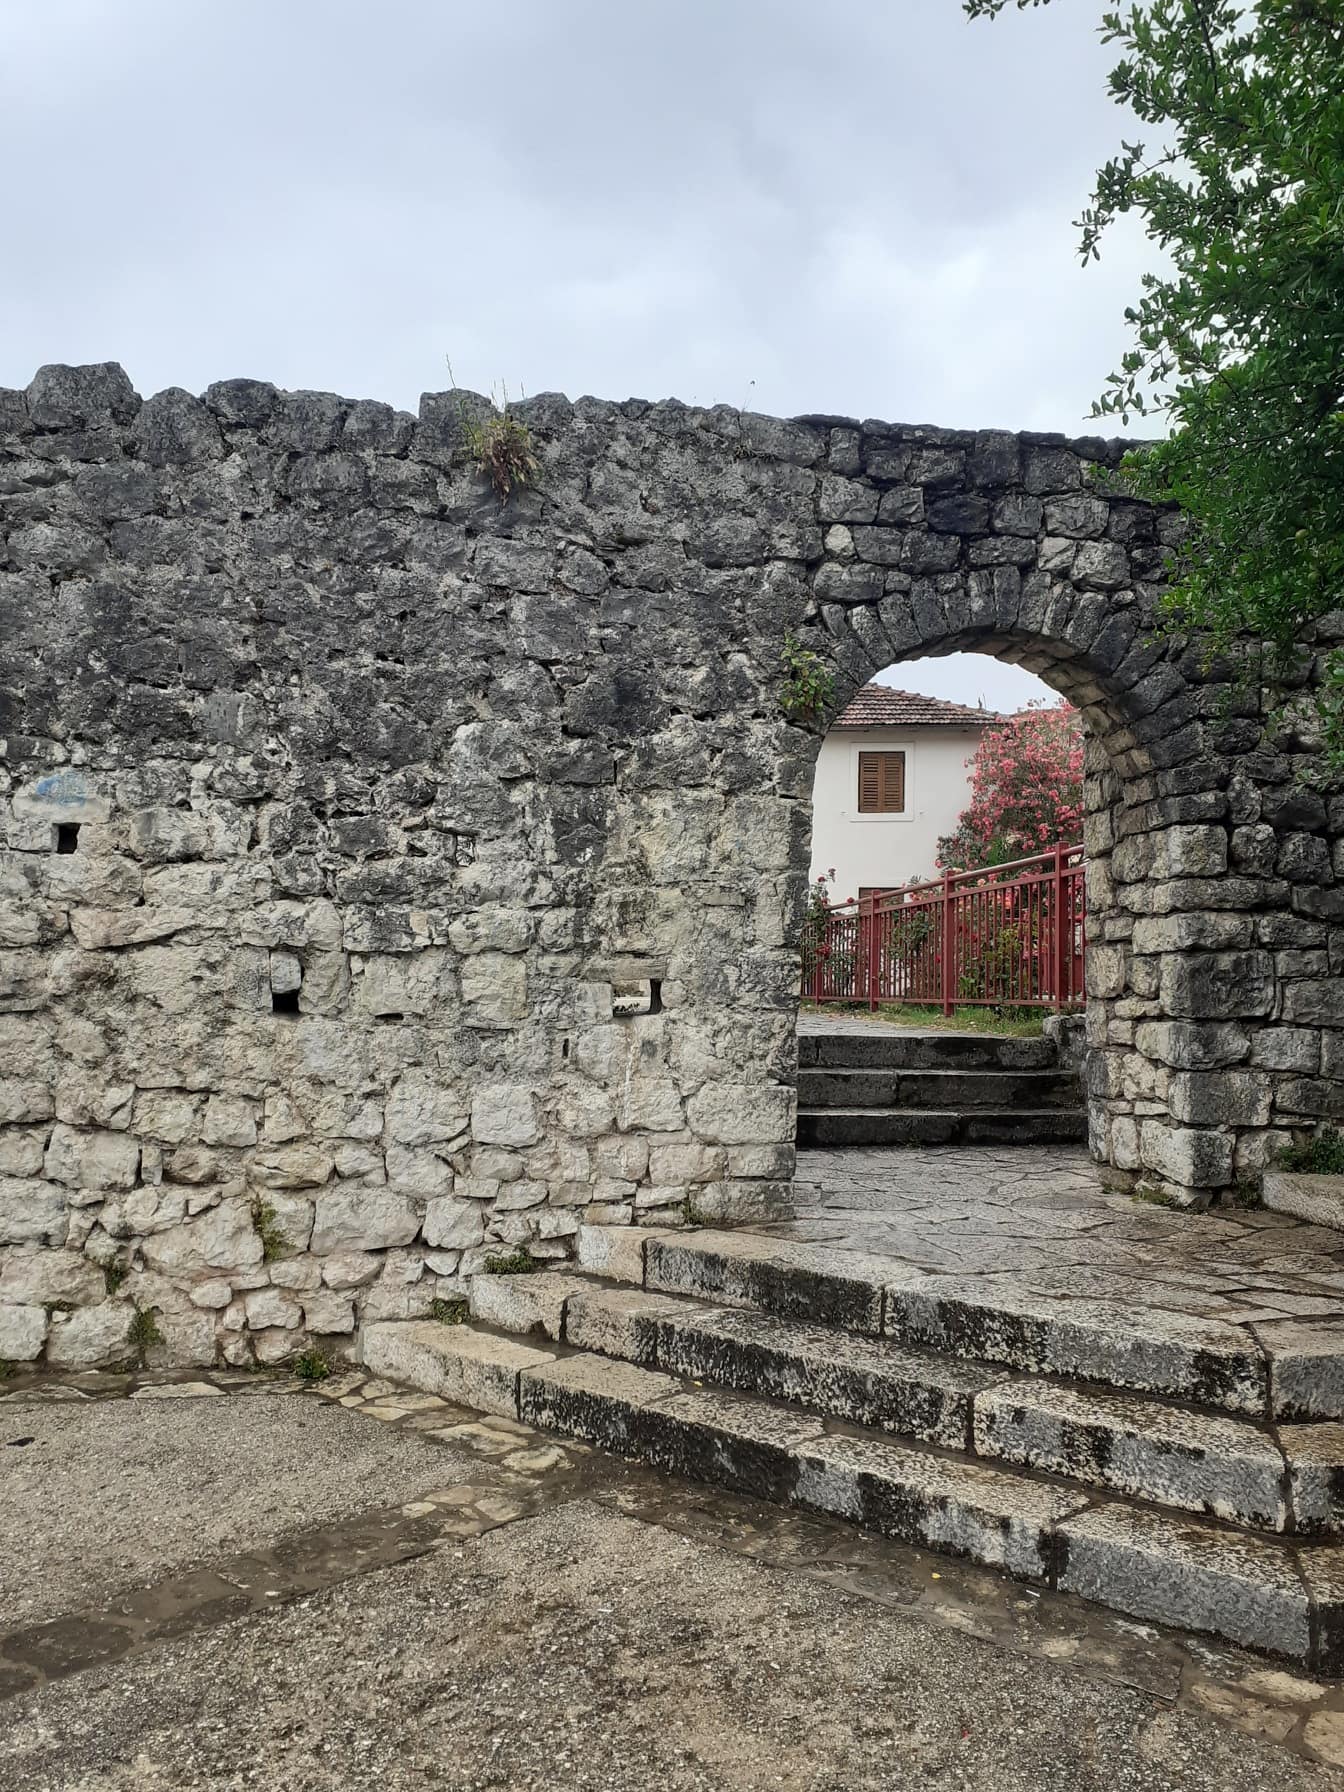 Mur de pierre avec passage en arc à Trebinje, Bosnie-Herzégovine